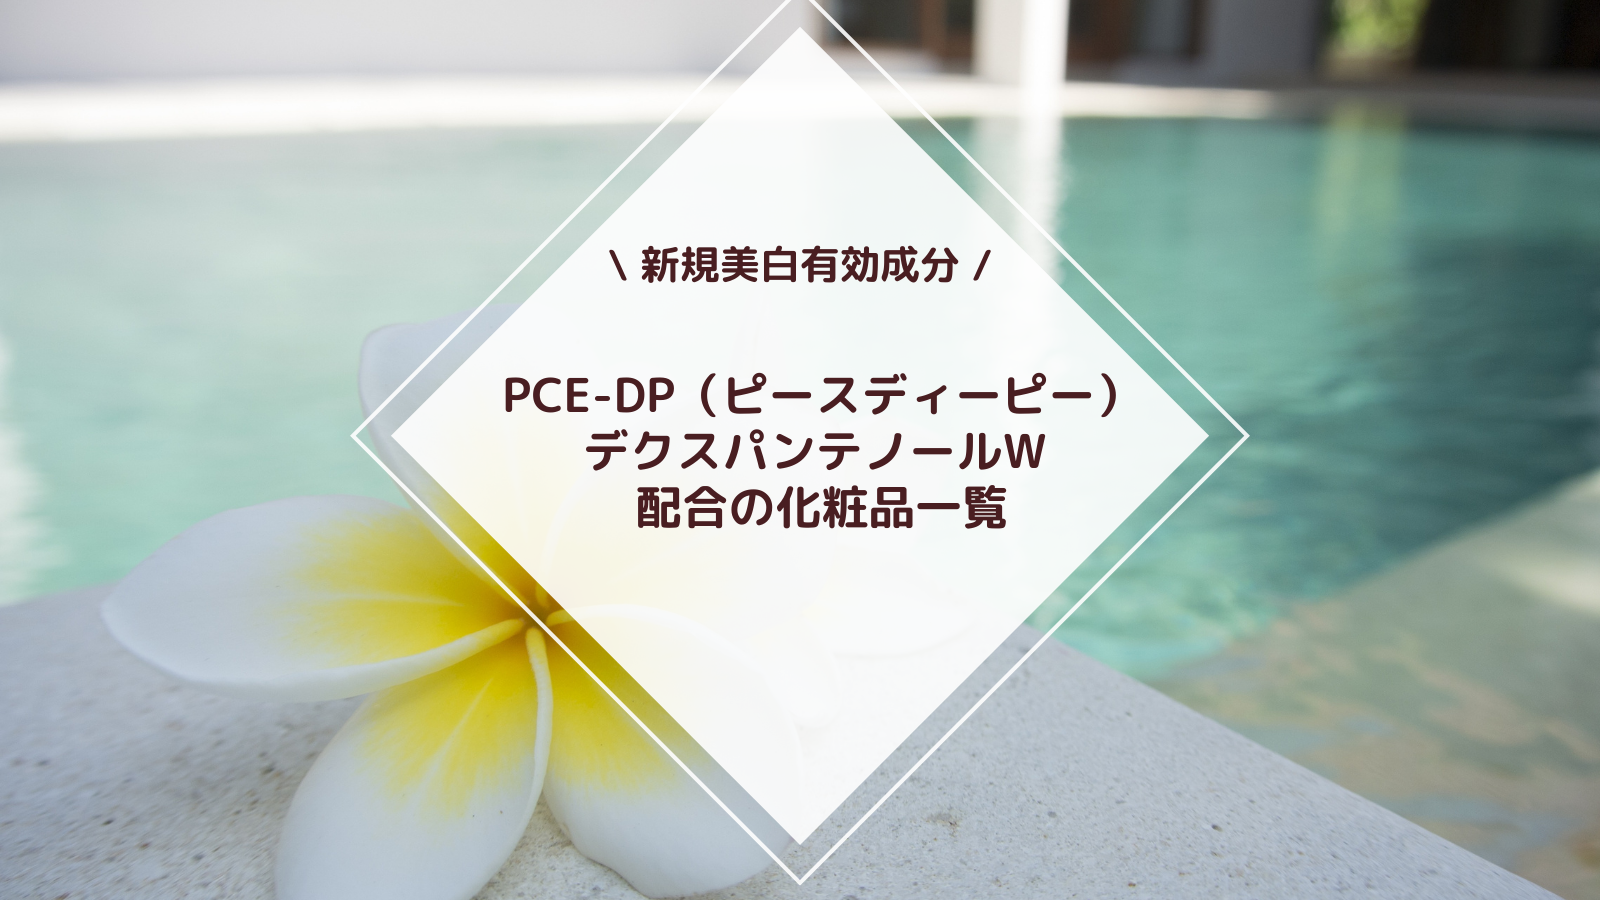 PCE-DP（ピースディーピー）:デクスパンテノールW 配合の化粧品一覧のアイキャッチ画像